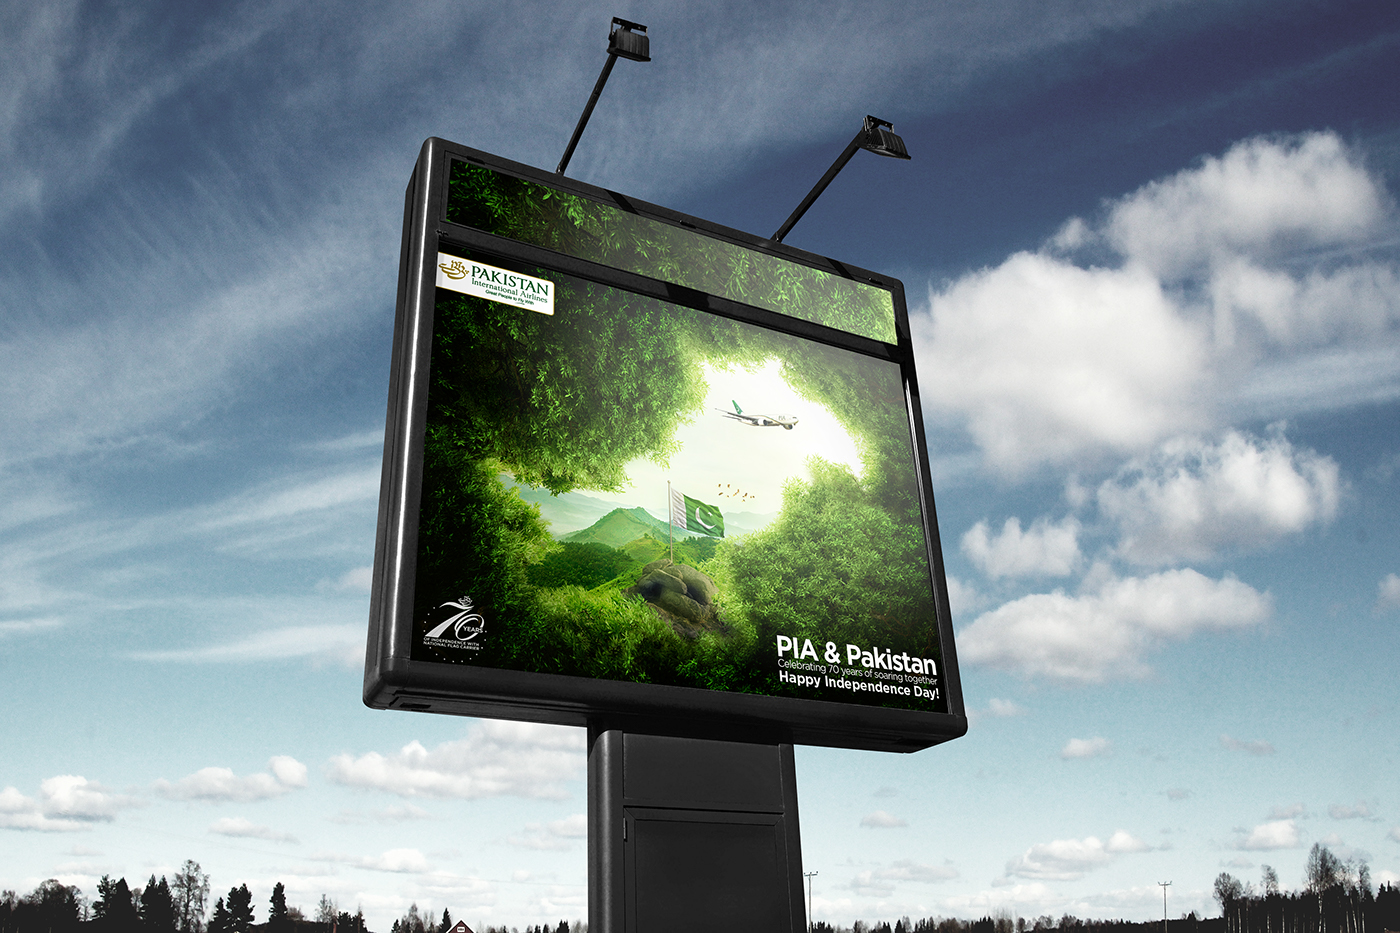 ads campaign creatives design communication social media corporate branding  poster pia